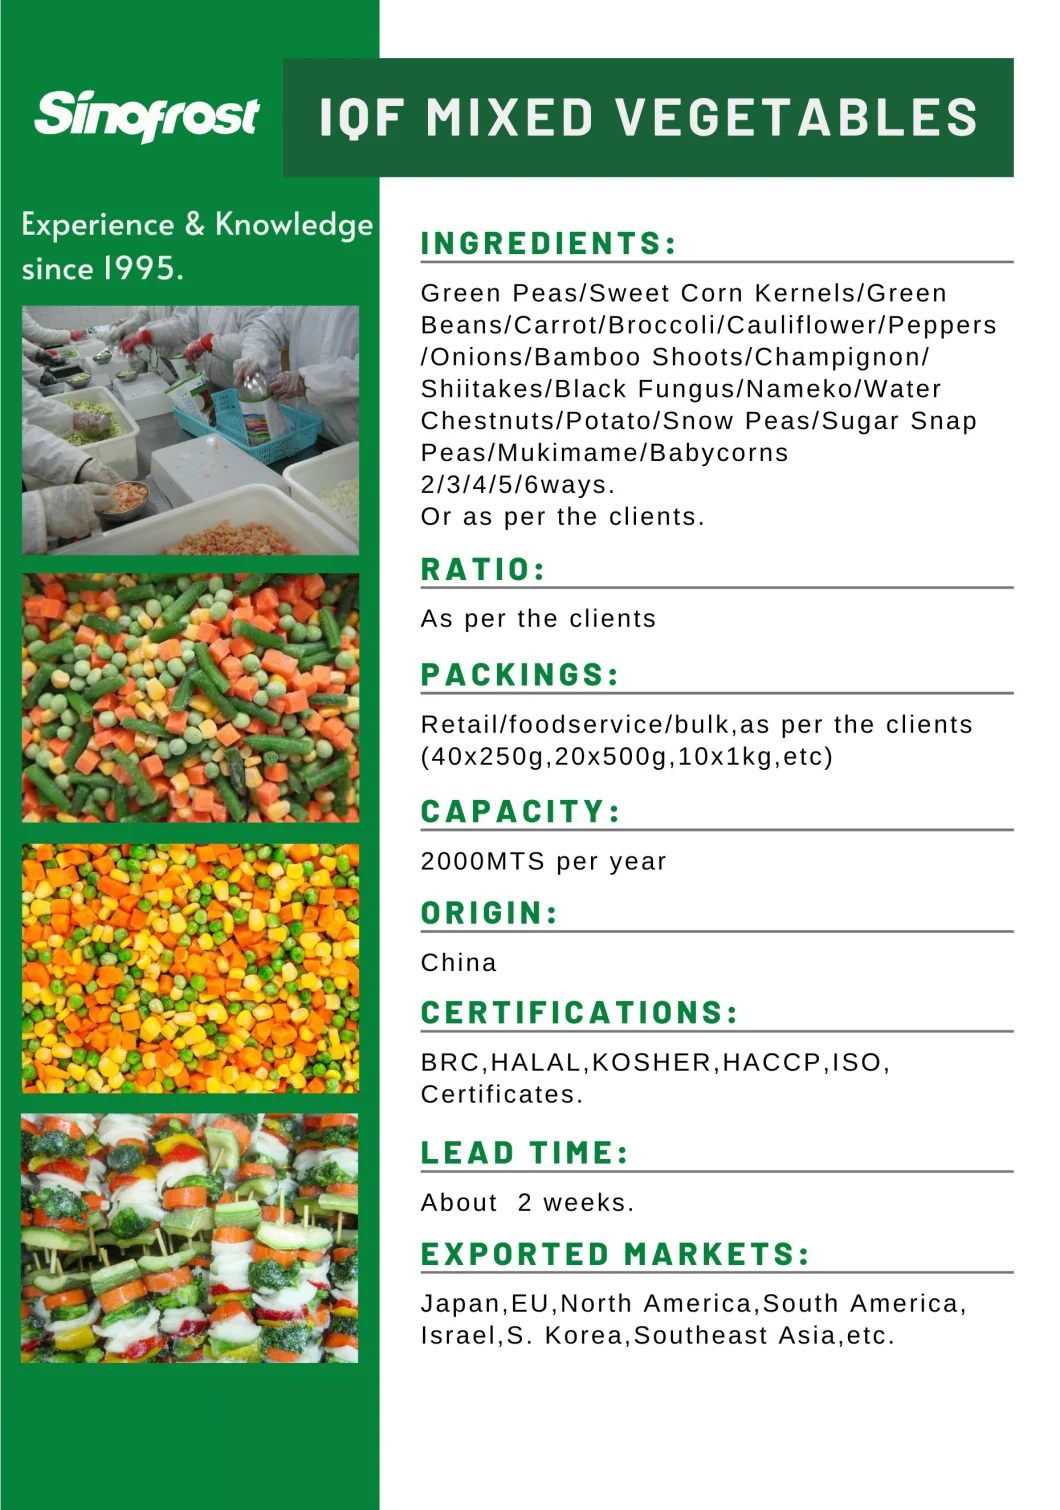 Frozen Mixed Vegetable, Vegetables Blend, IQF Vegetable Blend, IQF Mixed Vegetable, with Green Beans, Green Peas, Carrots, Sweet Corn Kernels, 2/3/4/5/6 Ways